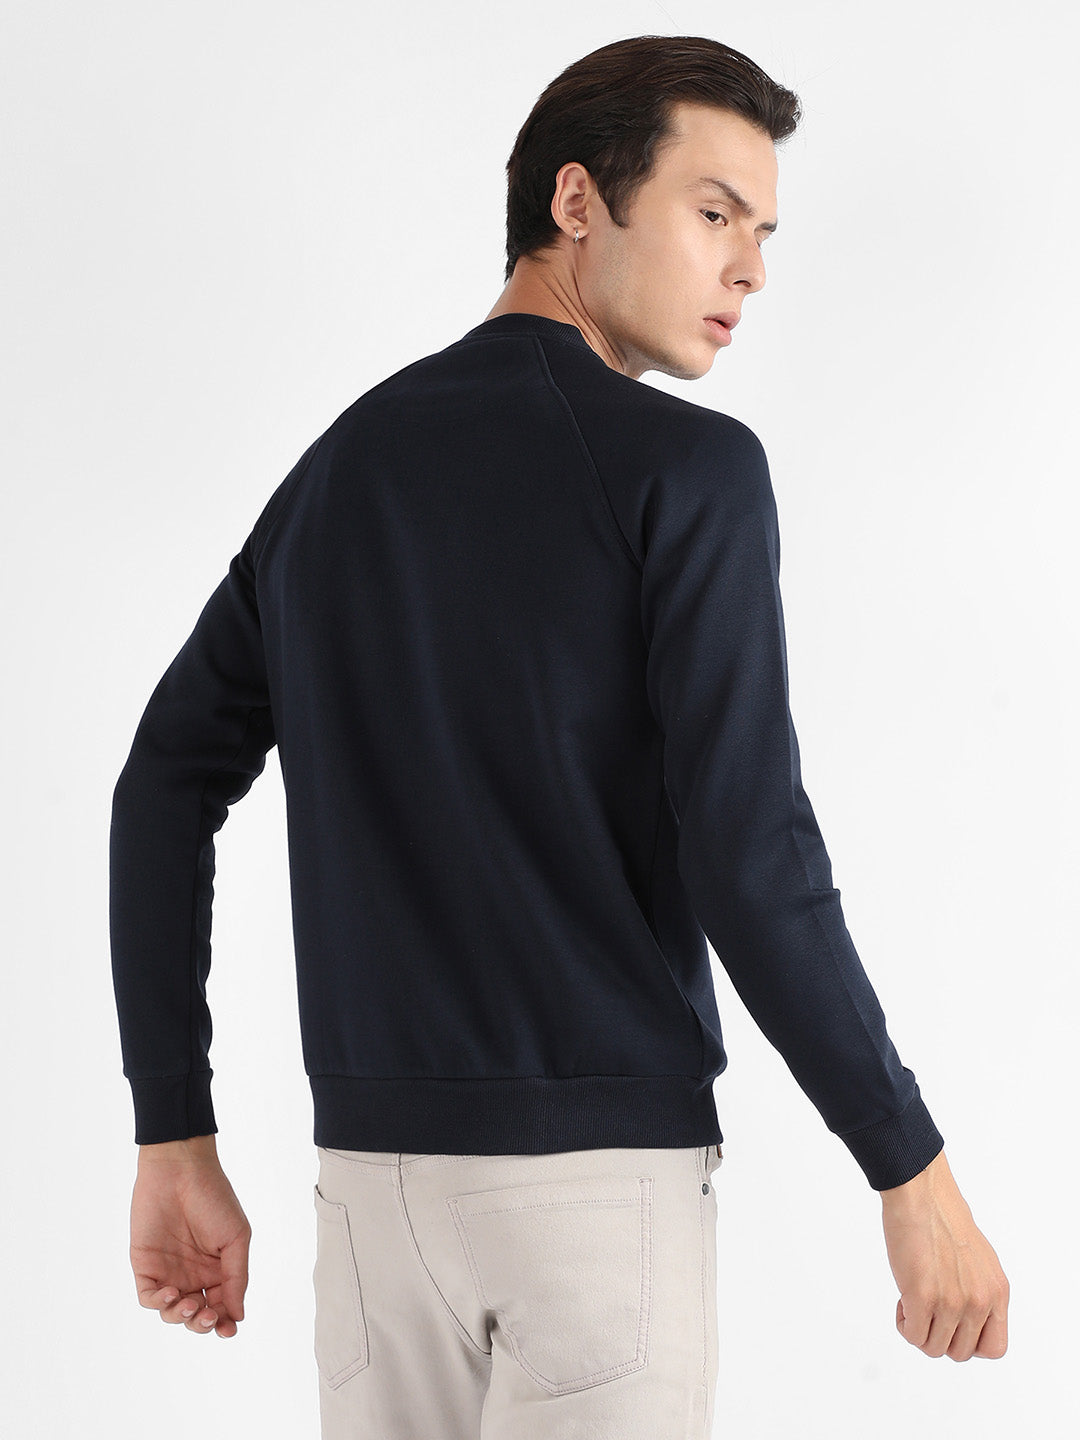 Sweatshirt With Asymmetriclal Zip